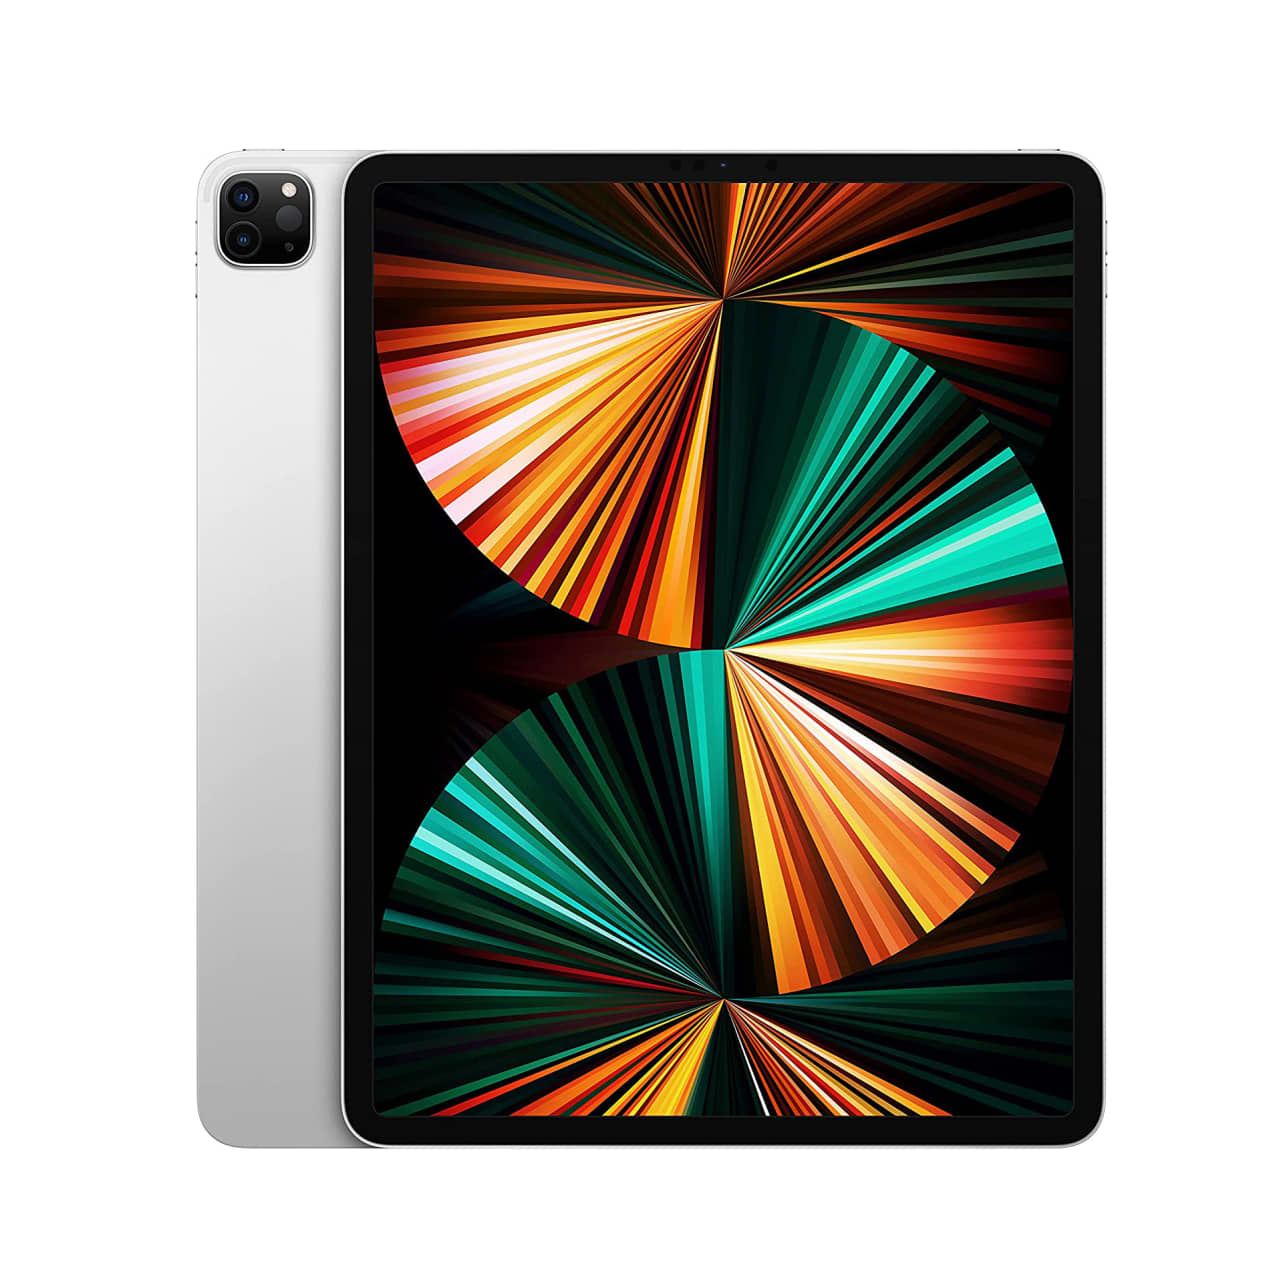 12.9-inch iPad Pro (5th Generation, 256GB)